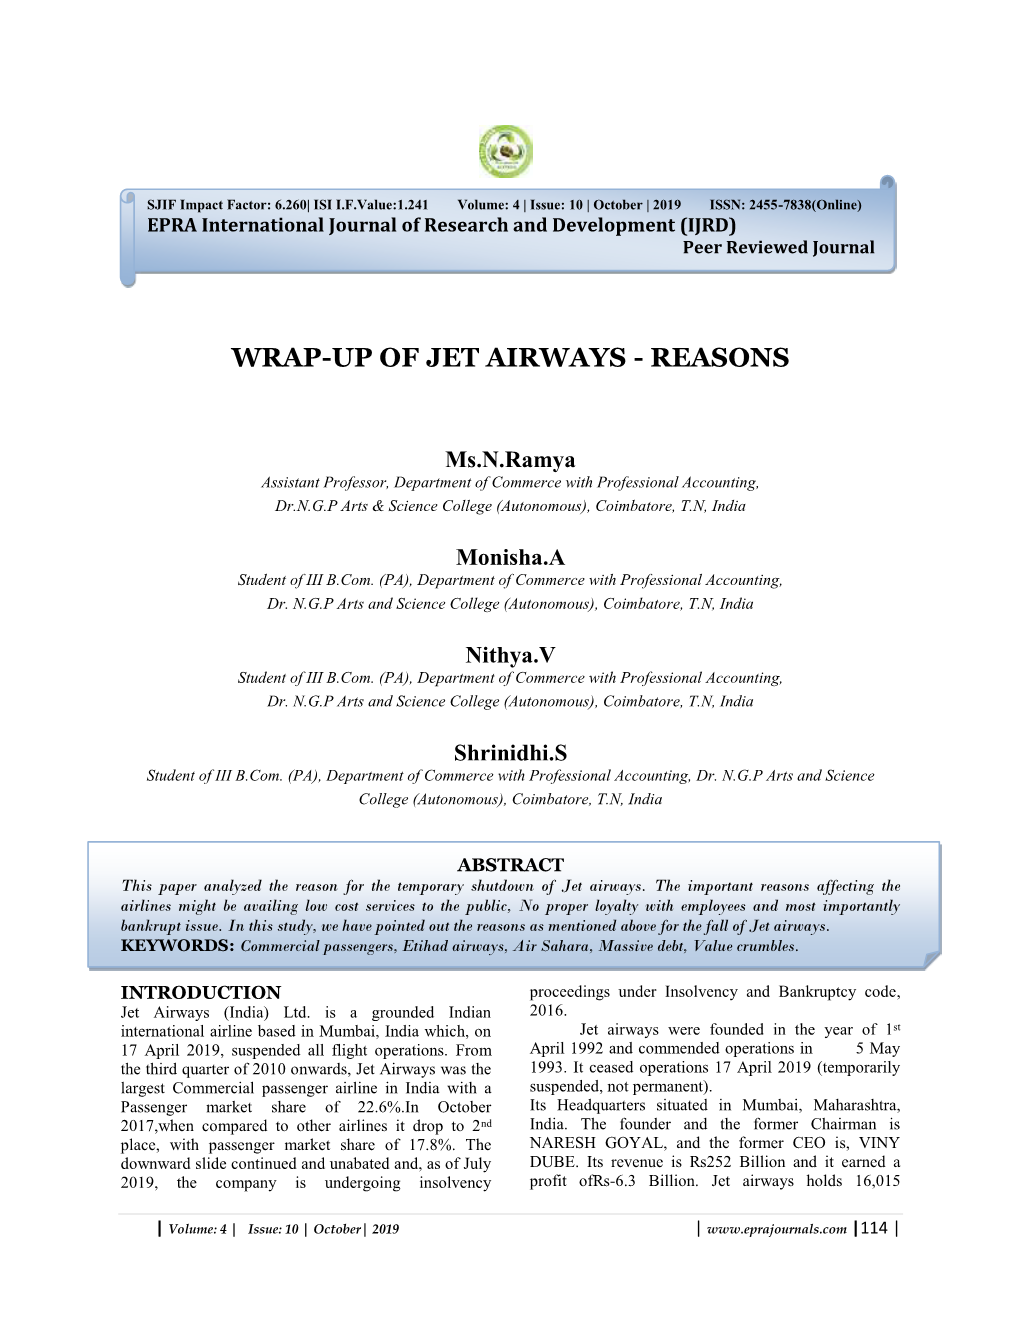 Wrap-Up of Jet Airways - Reasons